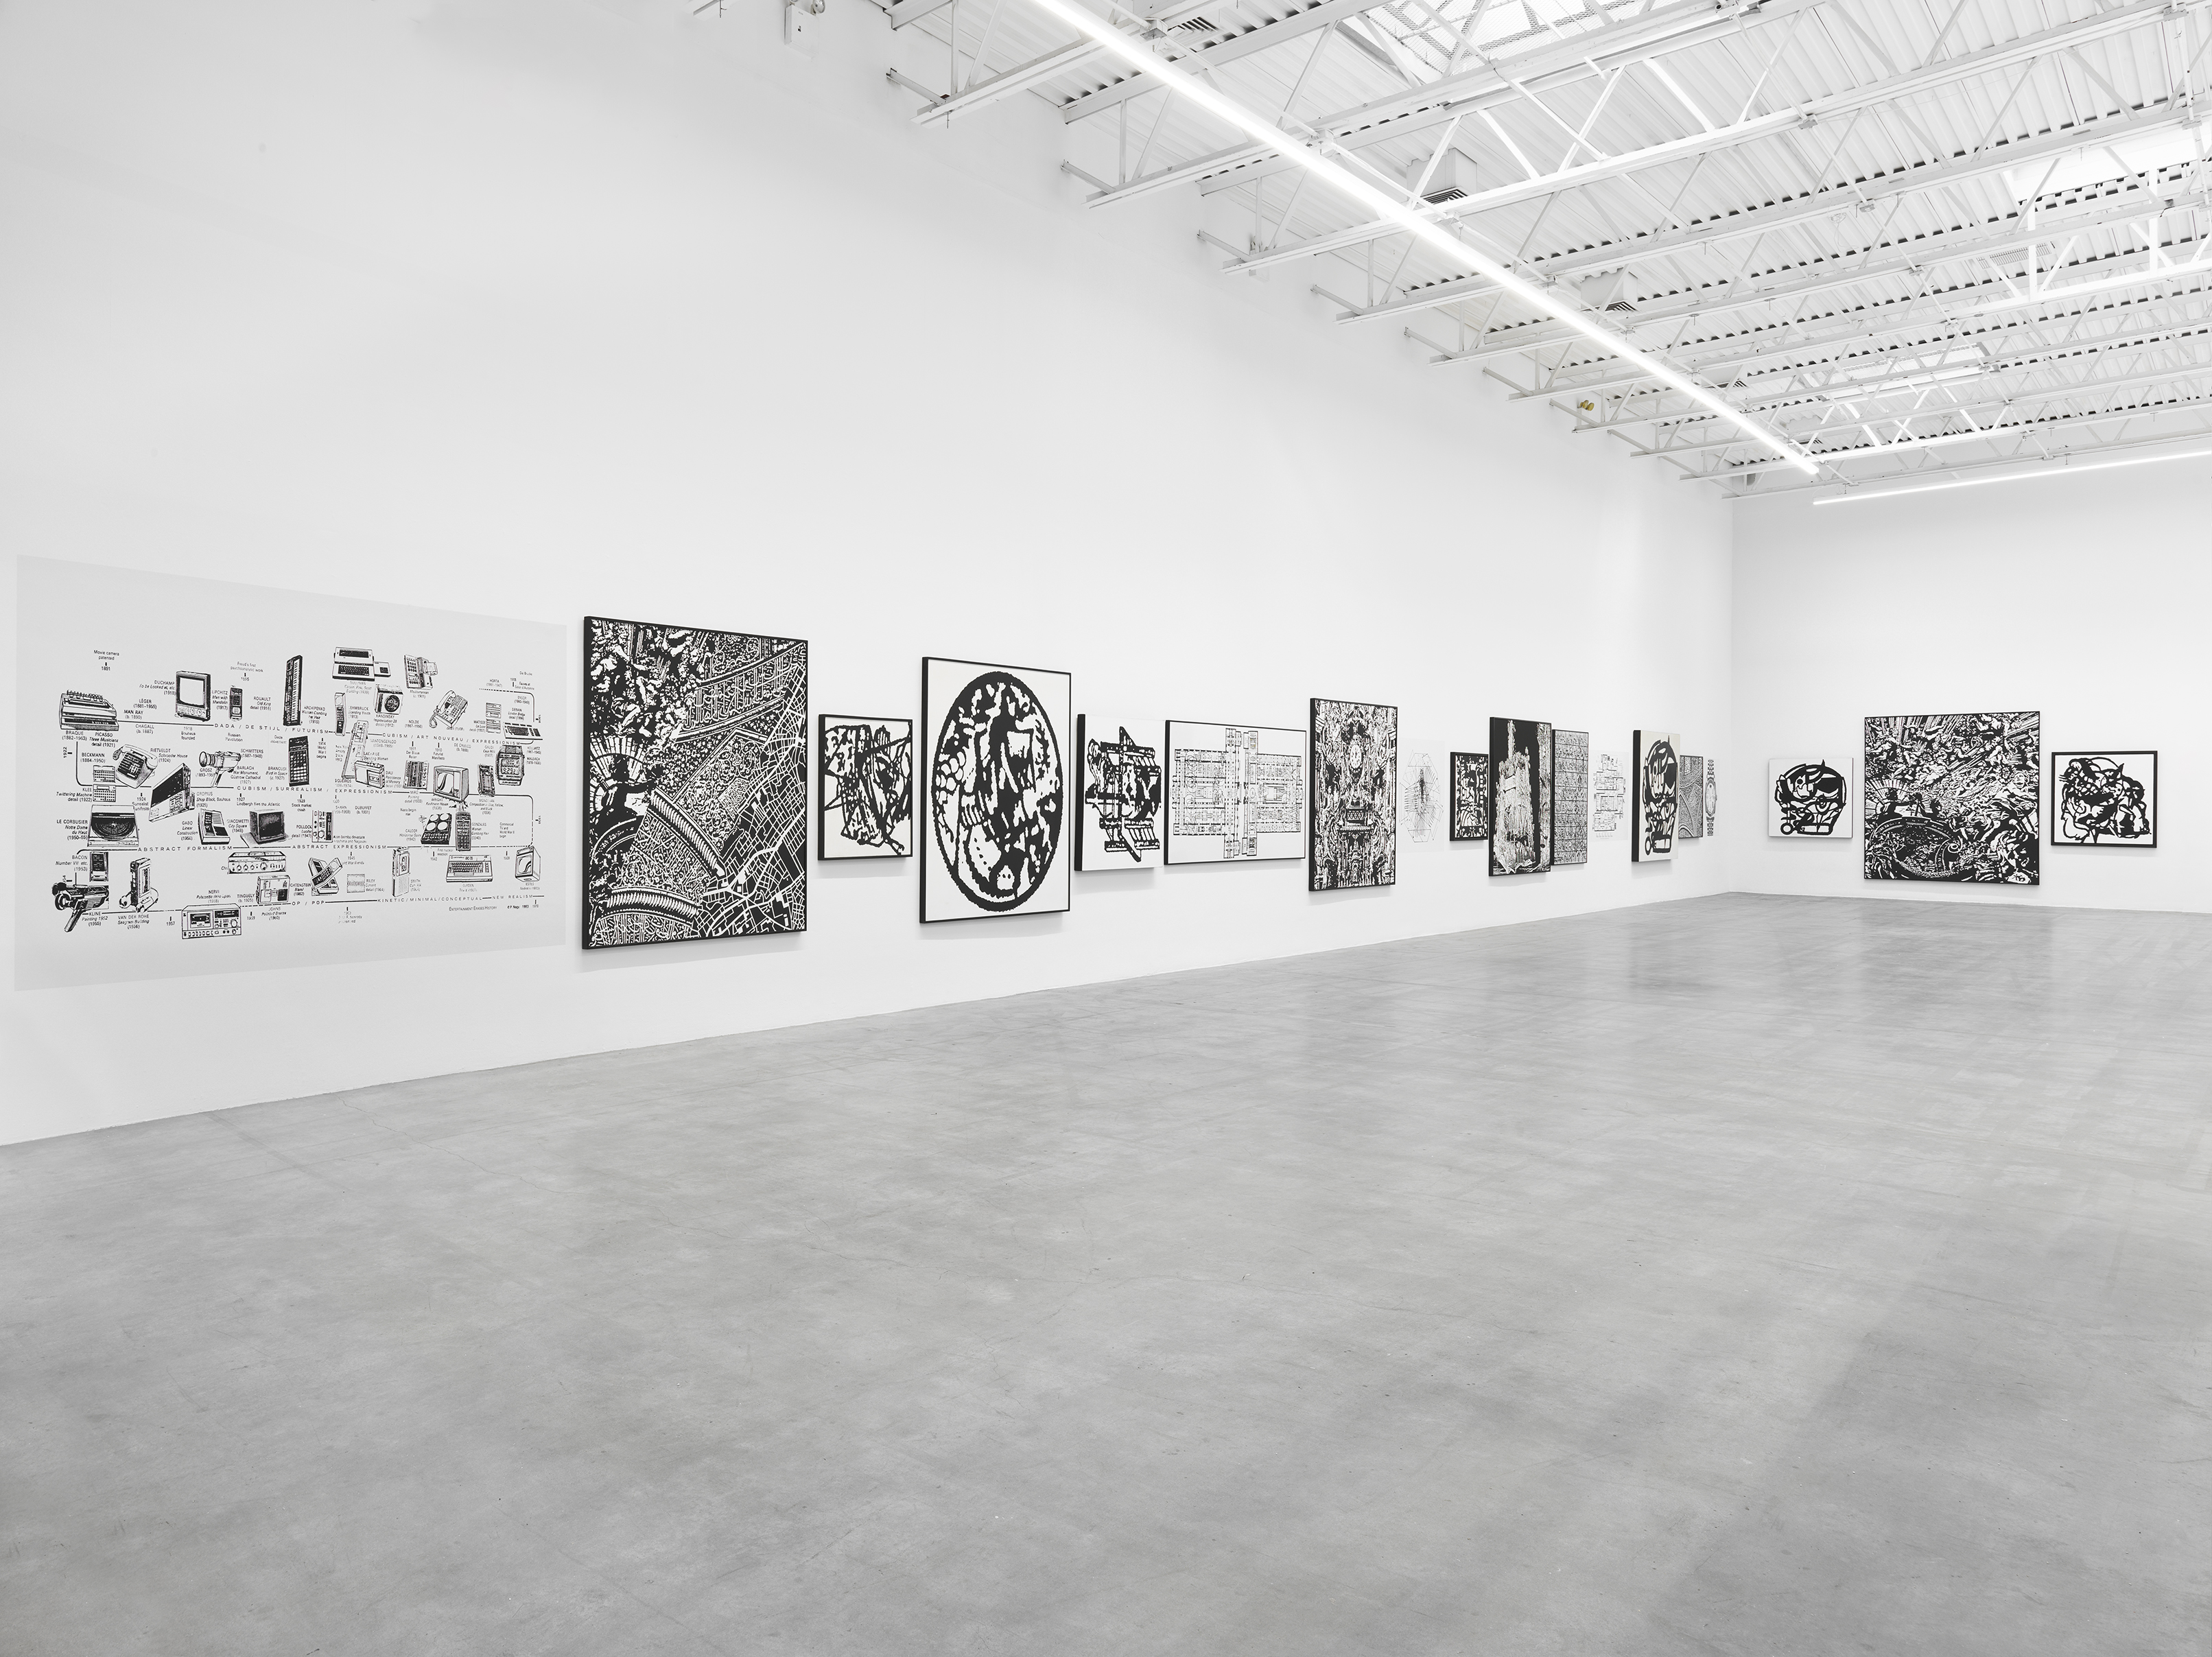 Installation view, Peter Nagy: Entertainment Erases History, Jeffery Deitch, New York, NY, 2020